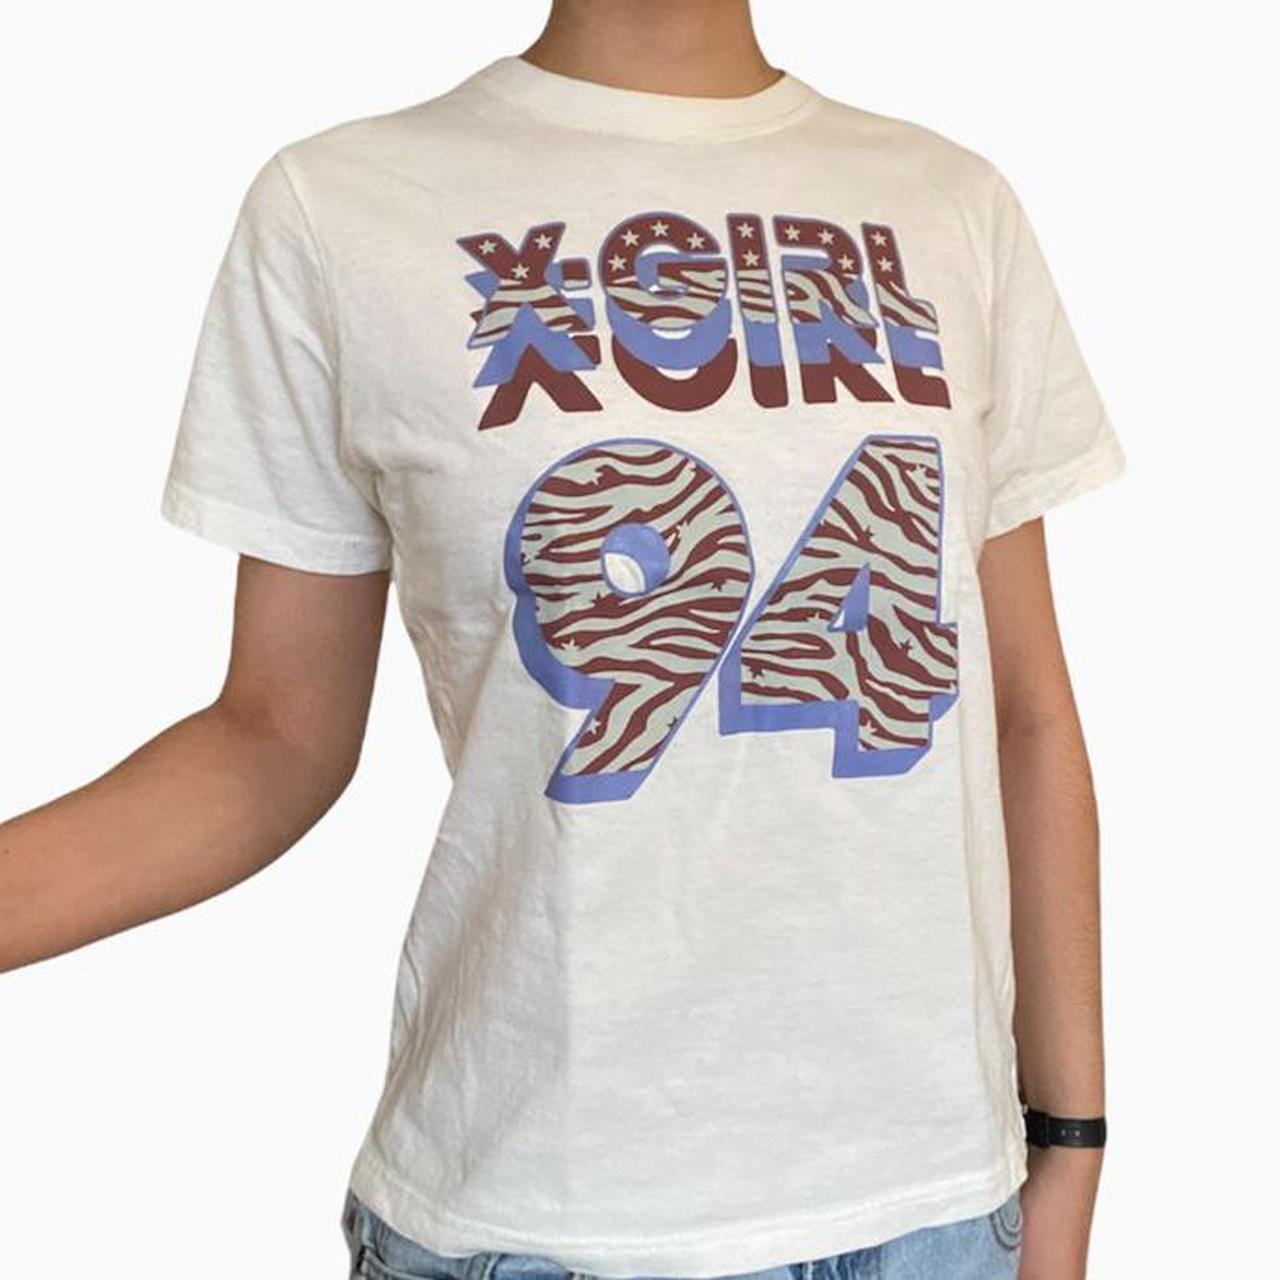 X-Girl  Women's White and Blue T-shirt